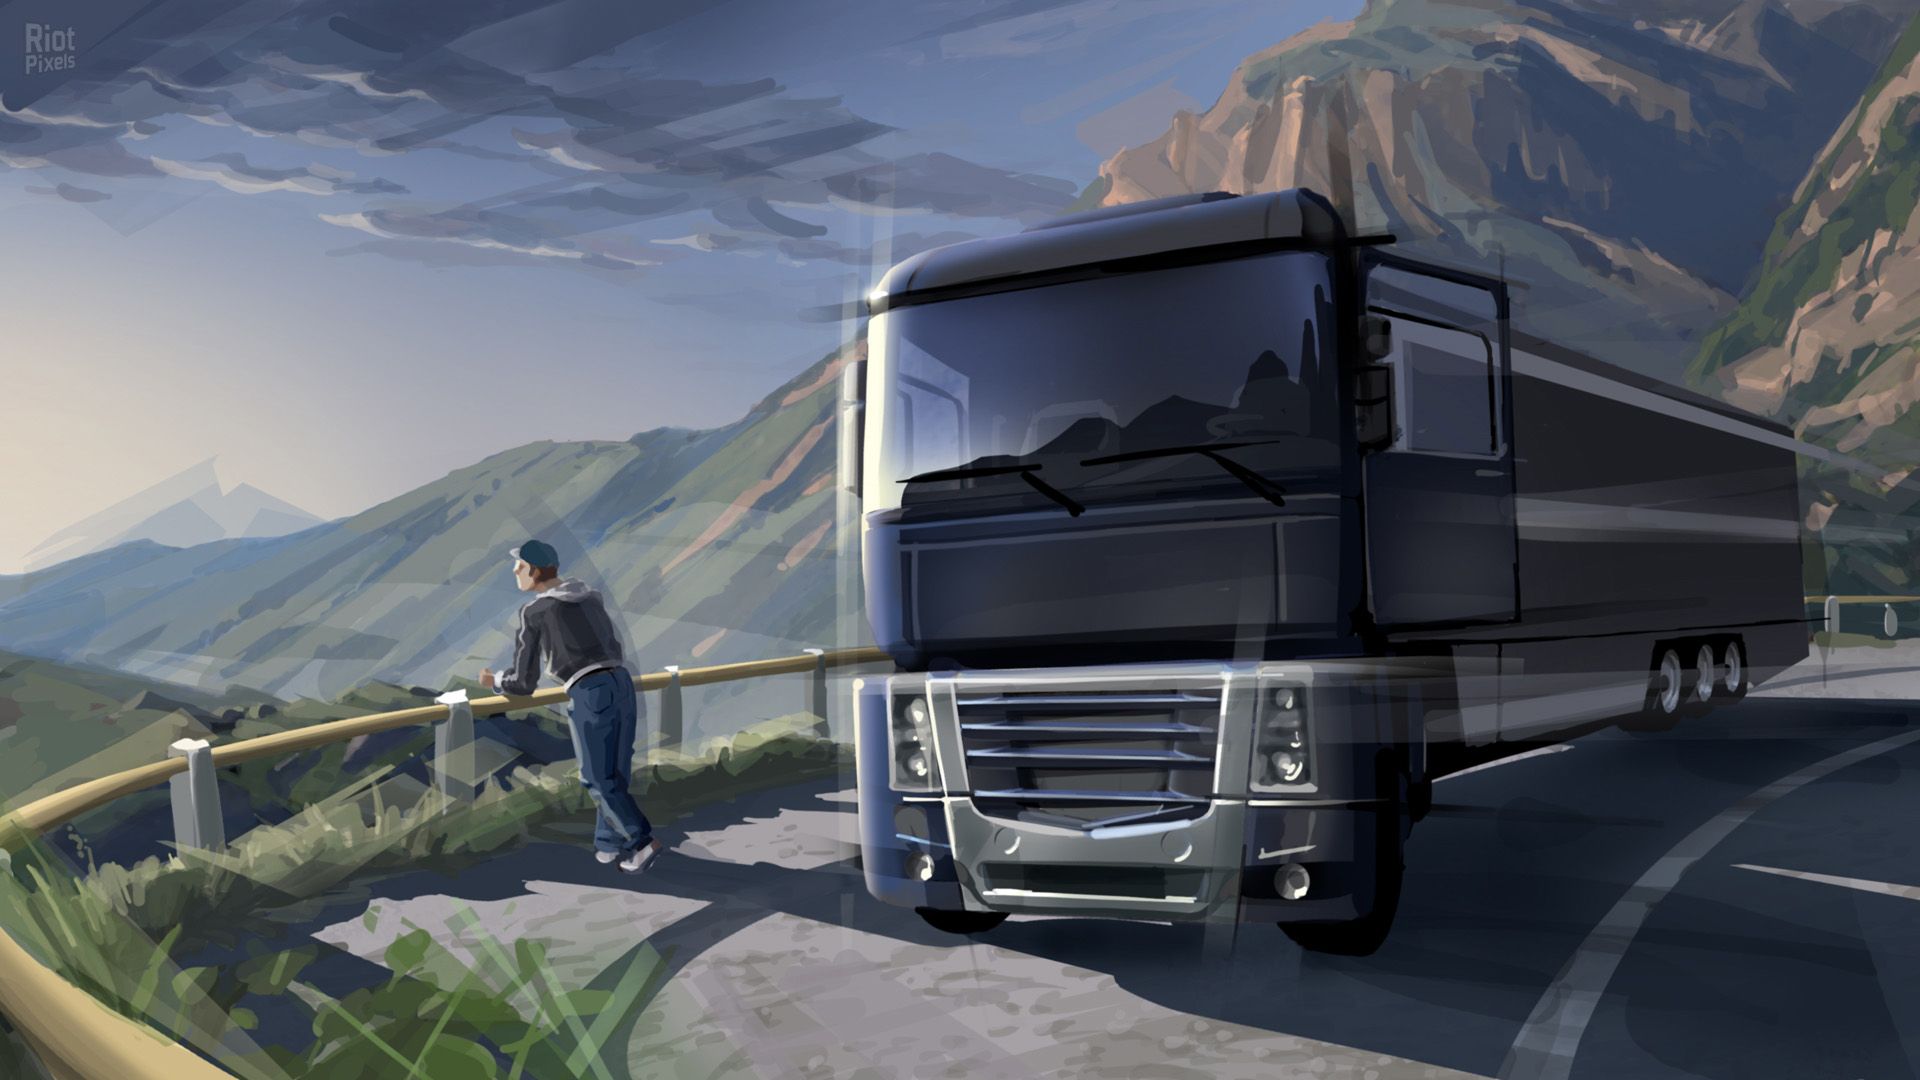 Euro Truck Simulator 2 wallpaper at Riot Pixels, image